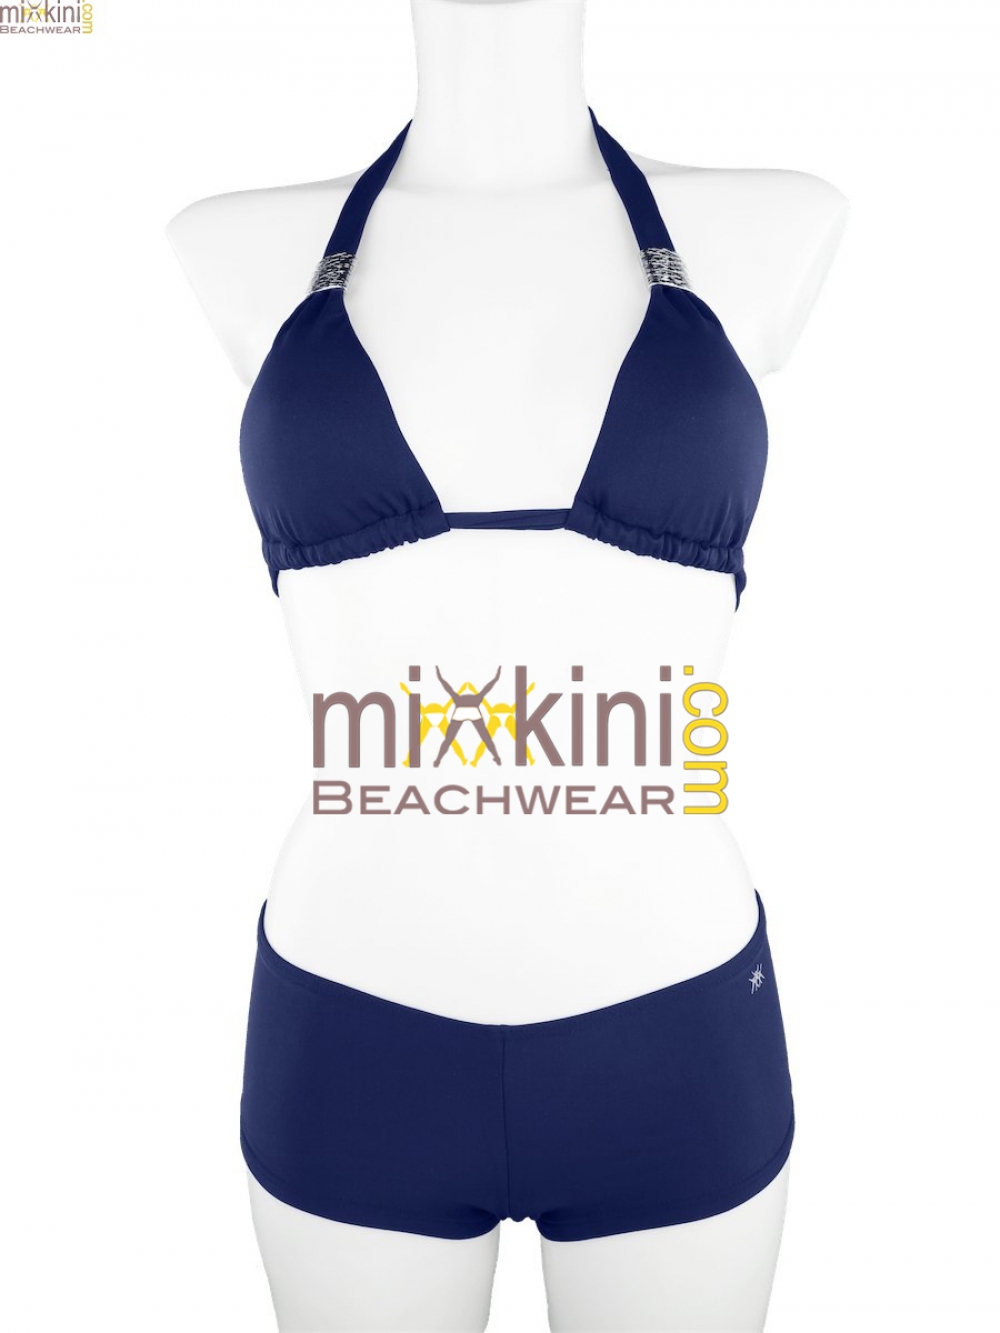 hotpants dunkelblau günstiger im set kaufen - mixkini beachwear